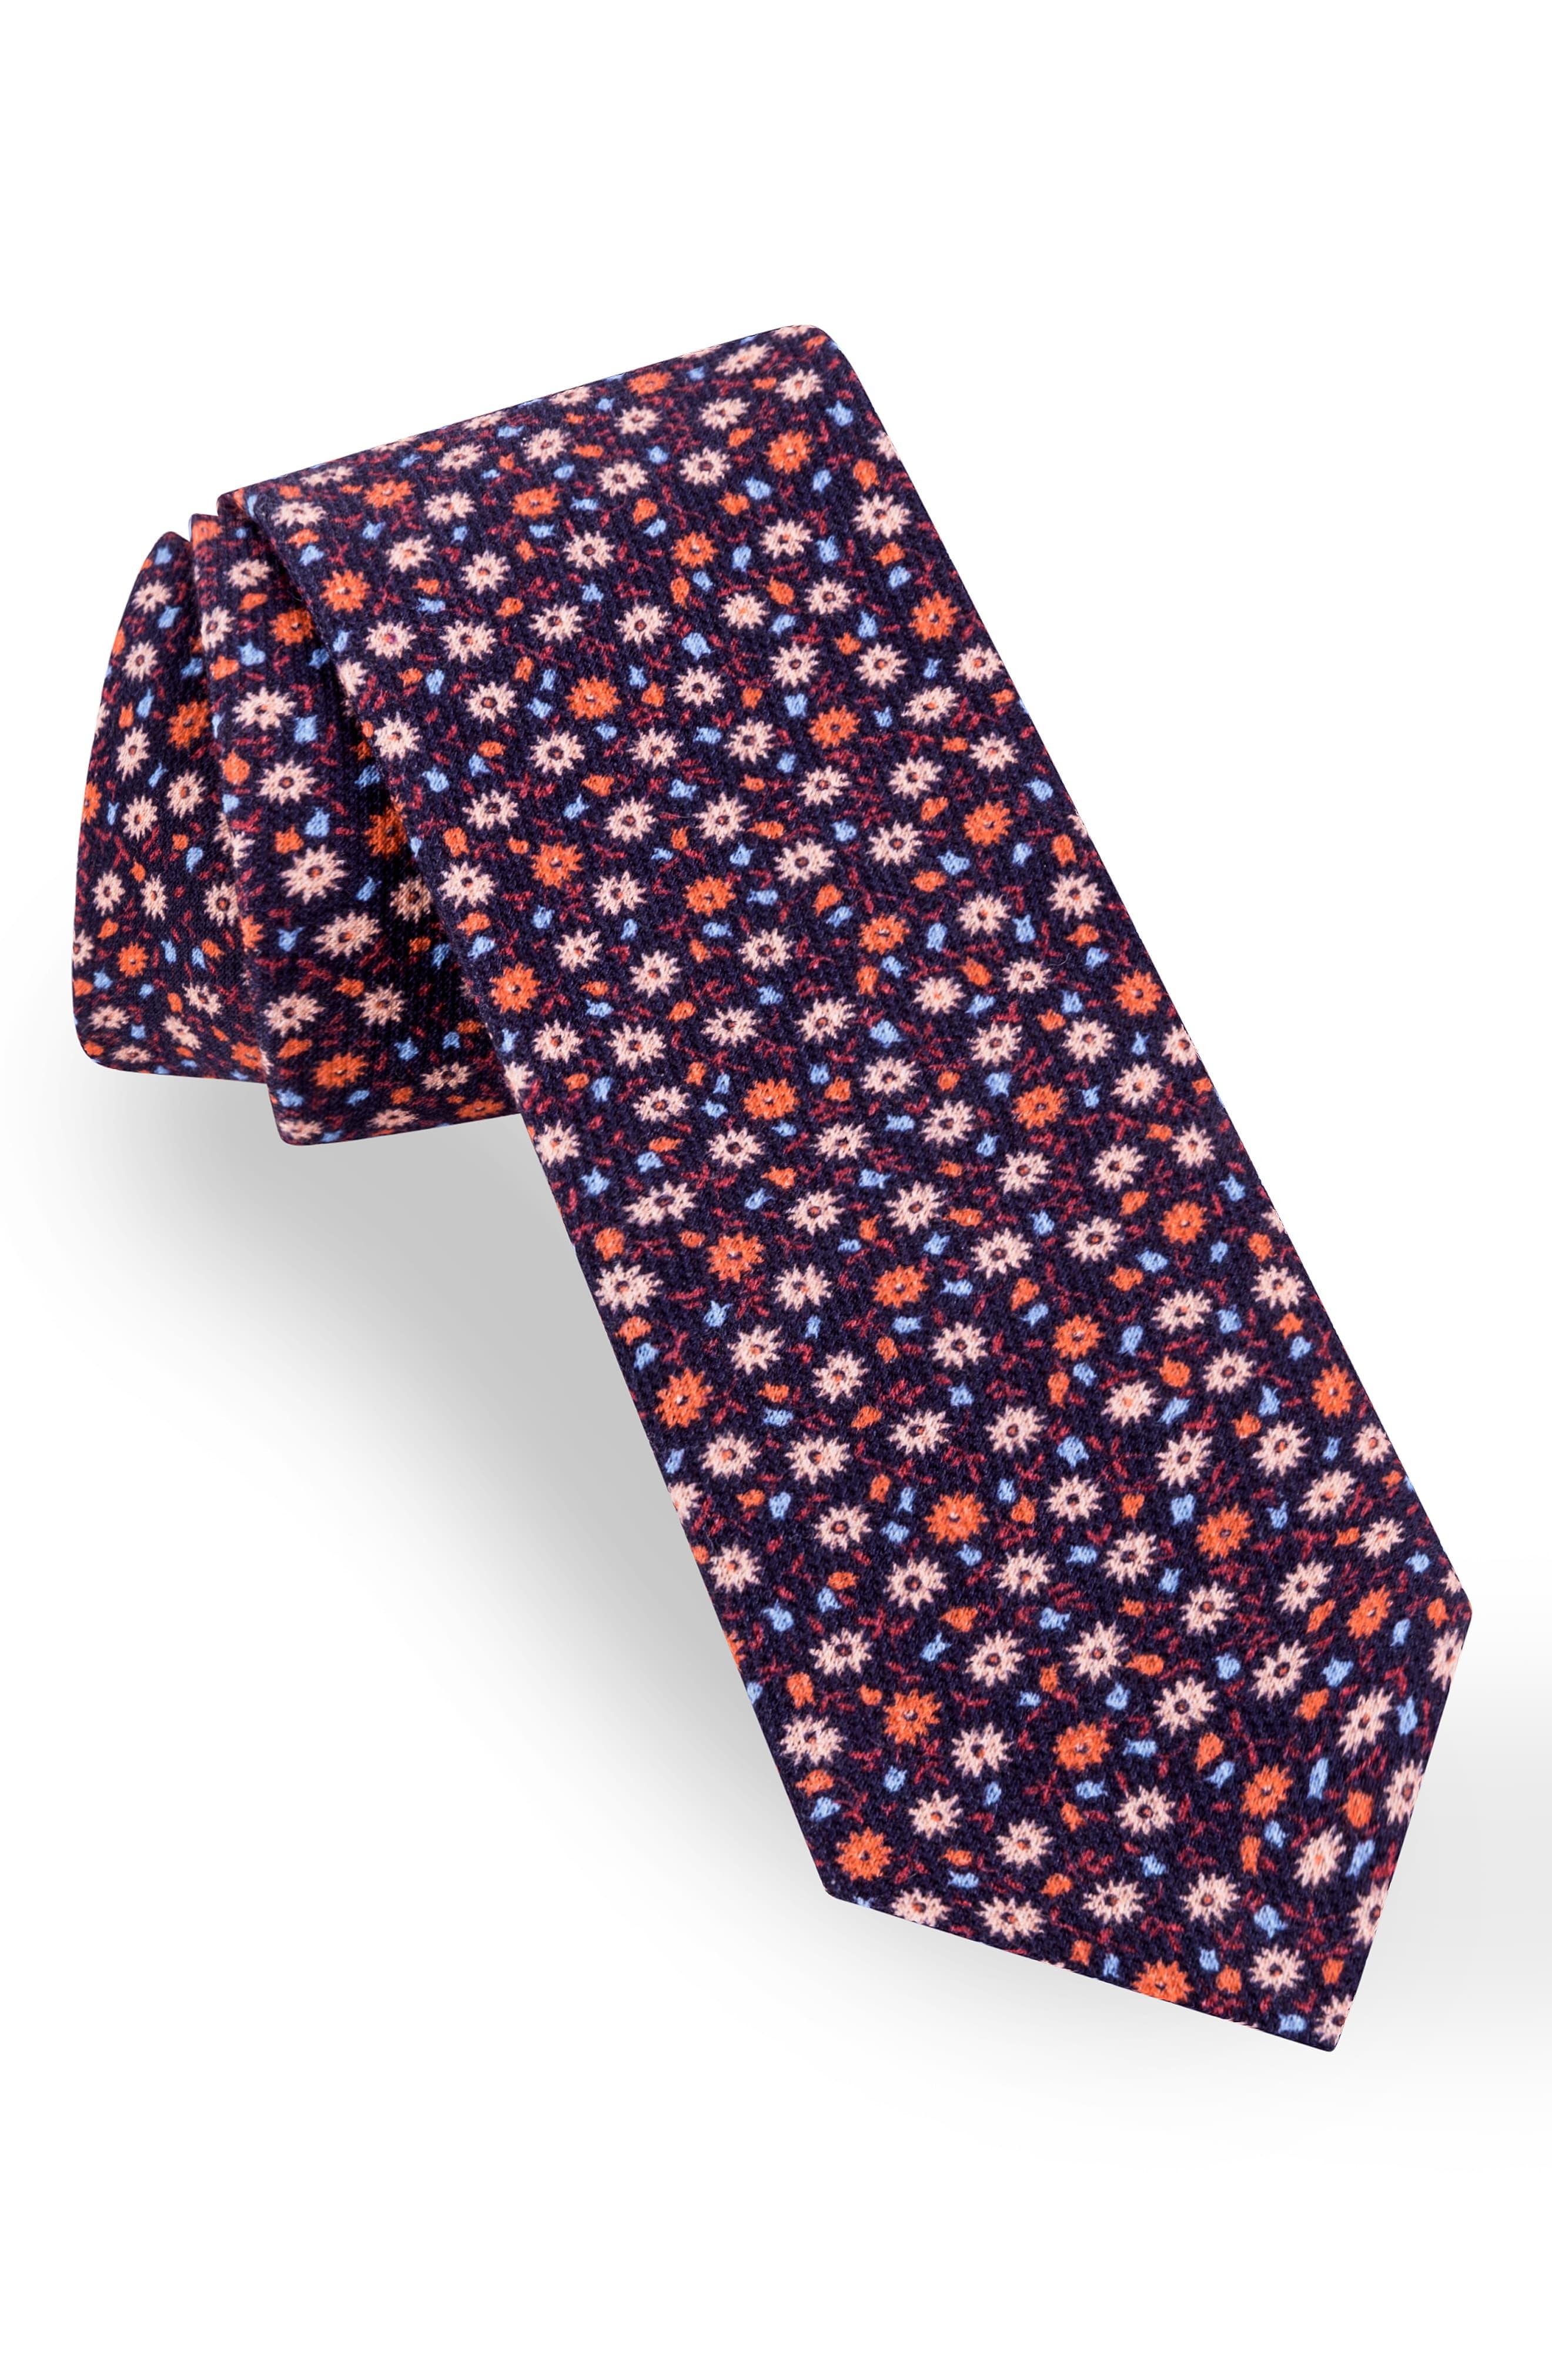 Ted Baker Microflower Cotton Tie in Orange for Men - Lyst